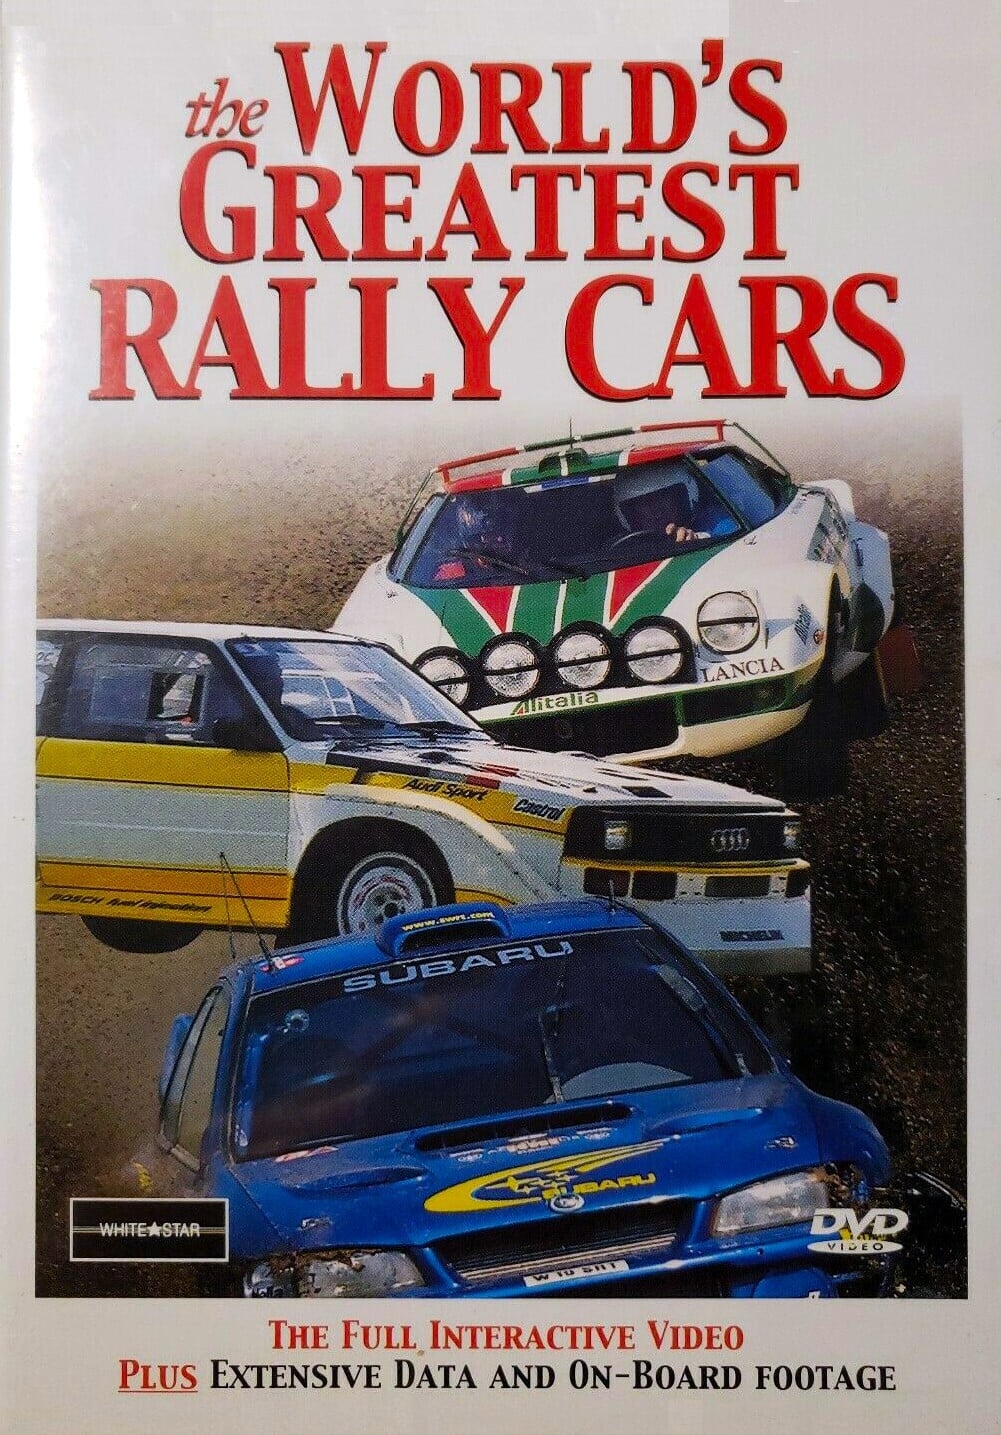 The World's Greatest Rally Cars